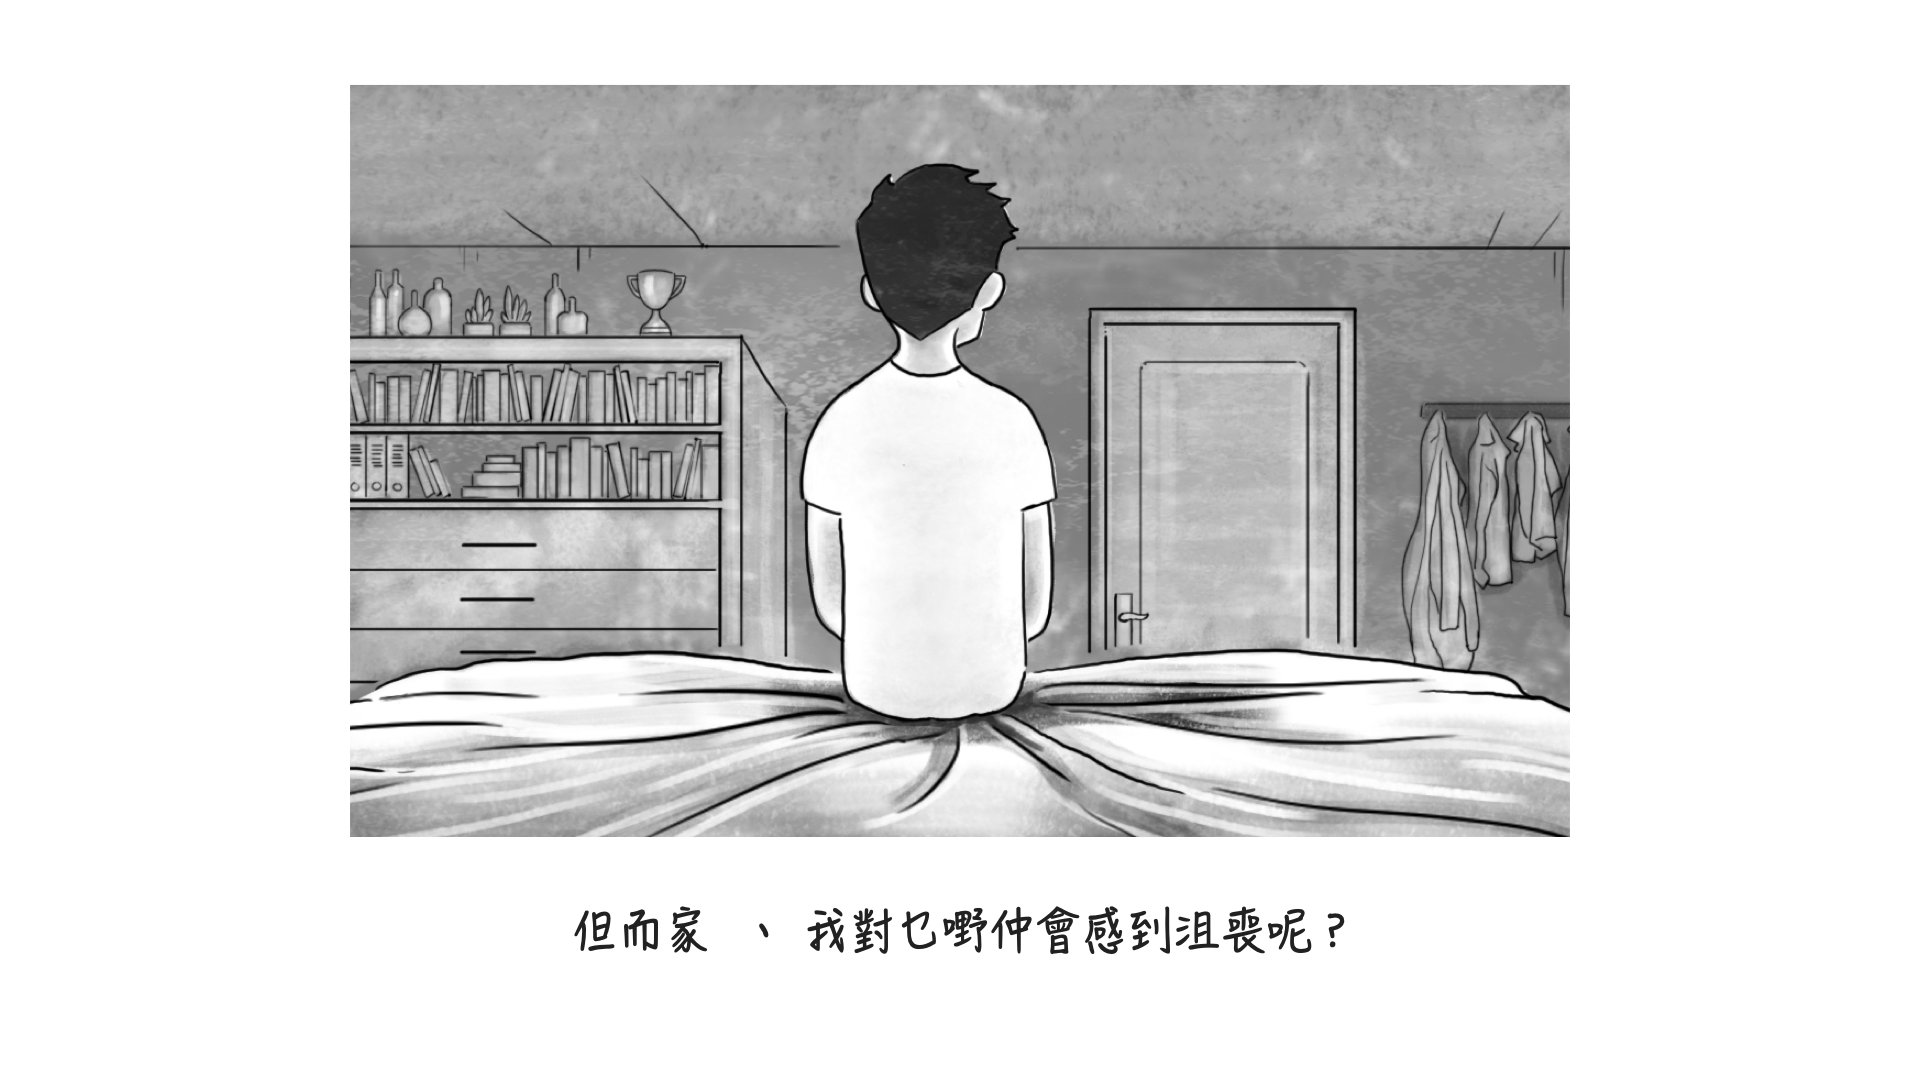 PP_Comic_Chinese_HK.017.jpeg